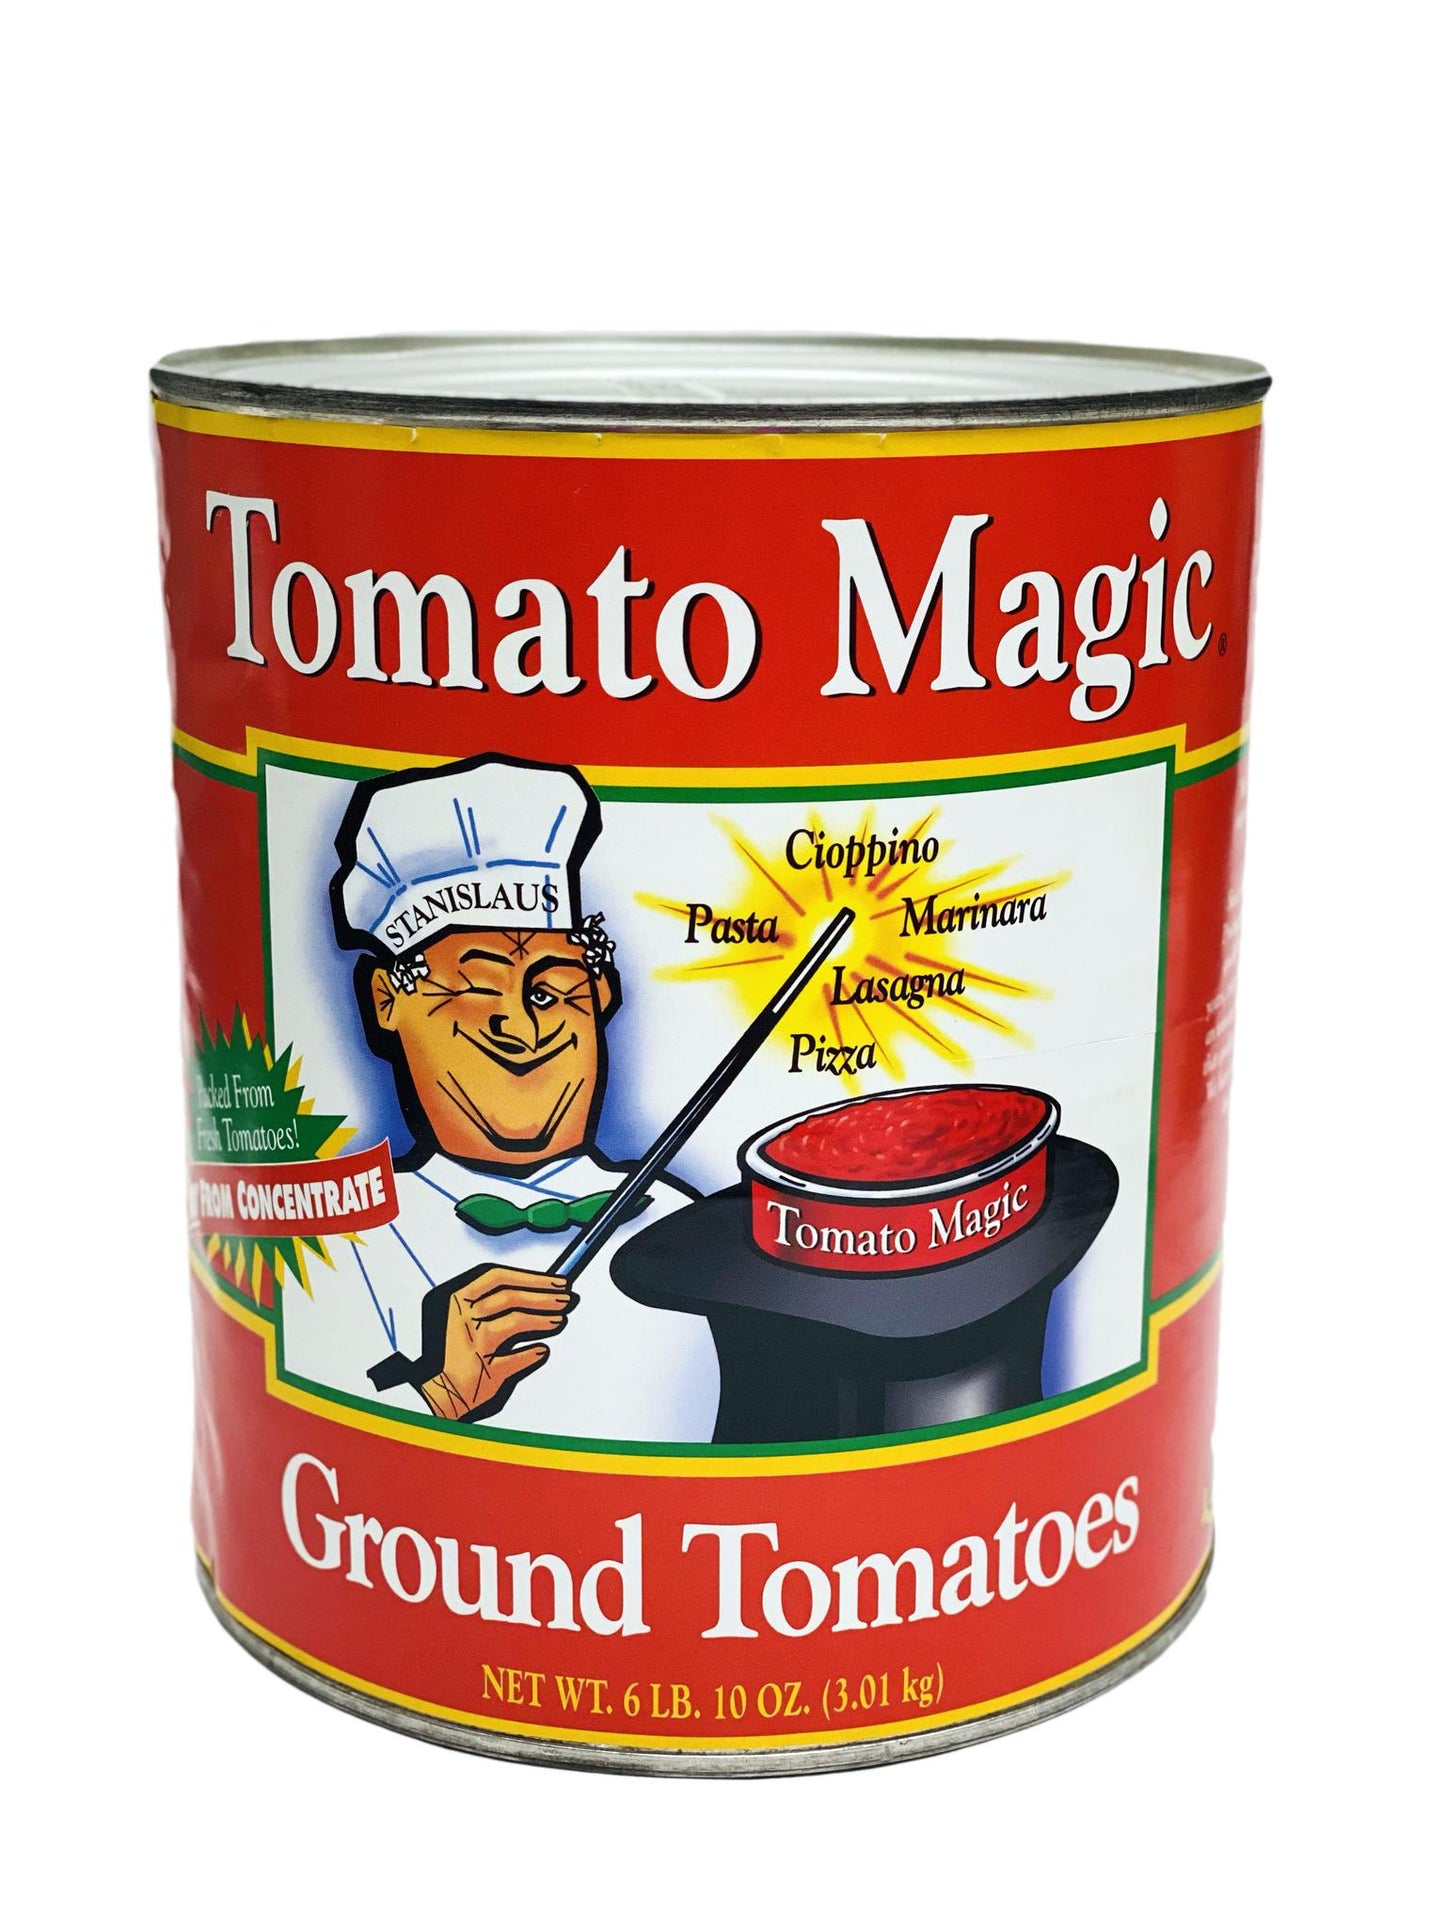 Tomato magic Ground Peeled Tomatoes, 6 lb 10 oz